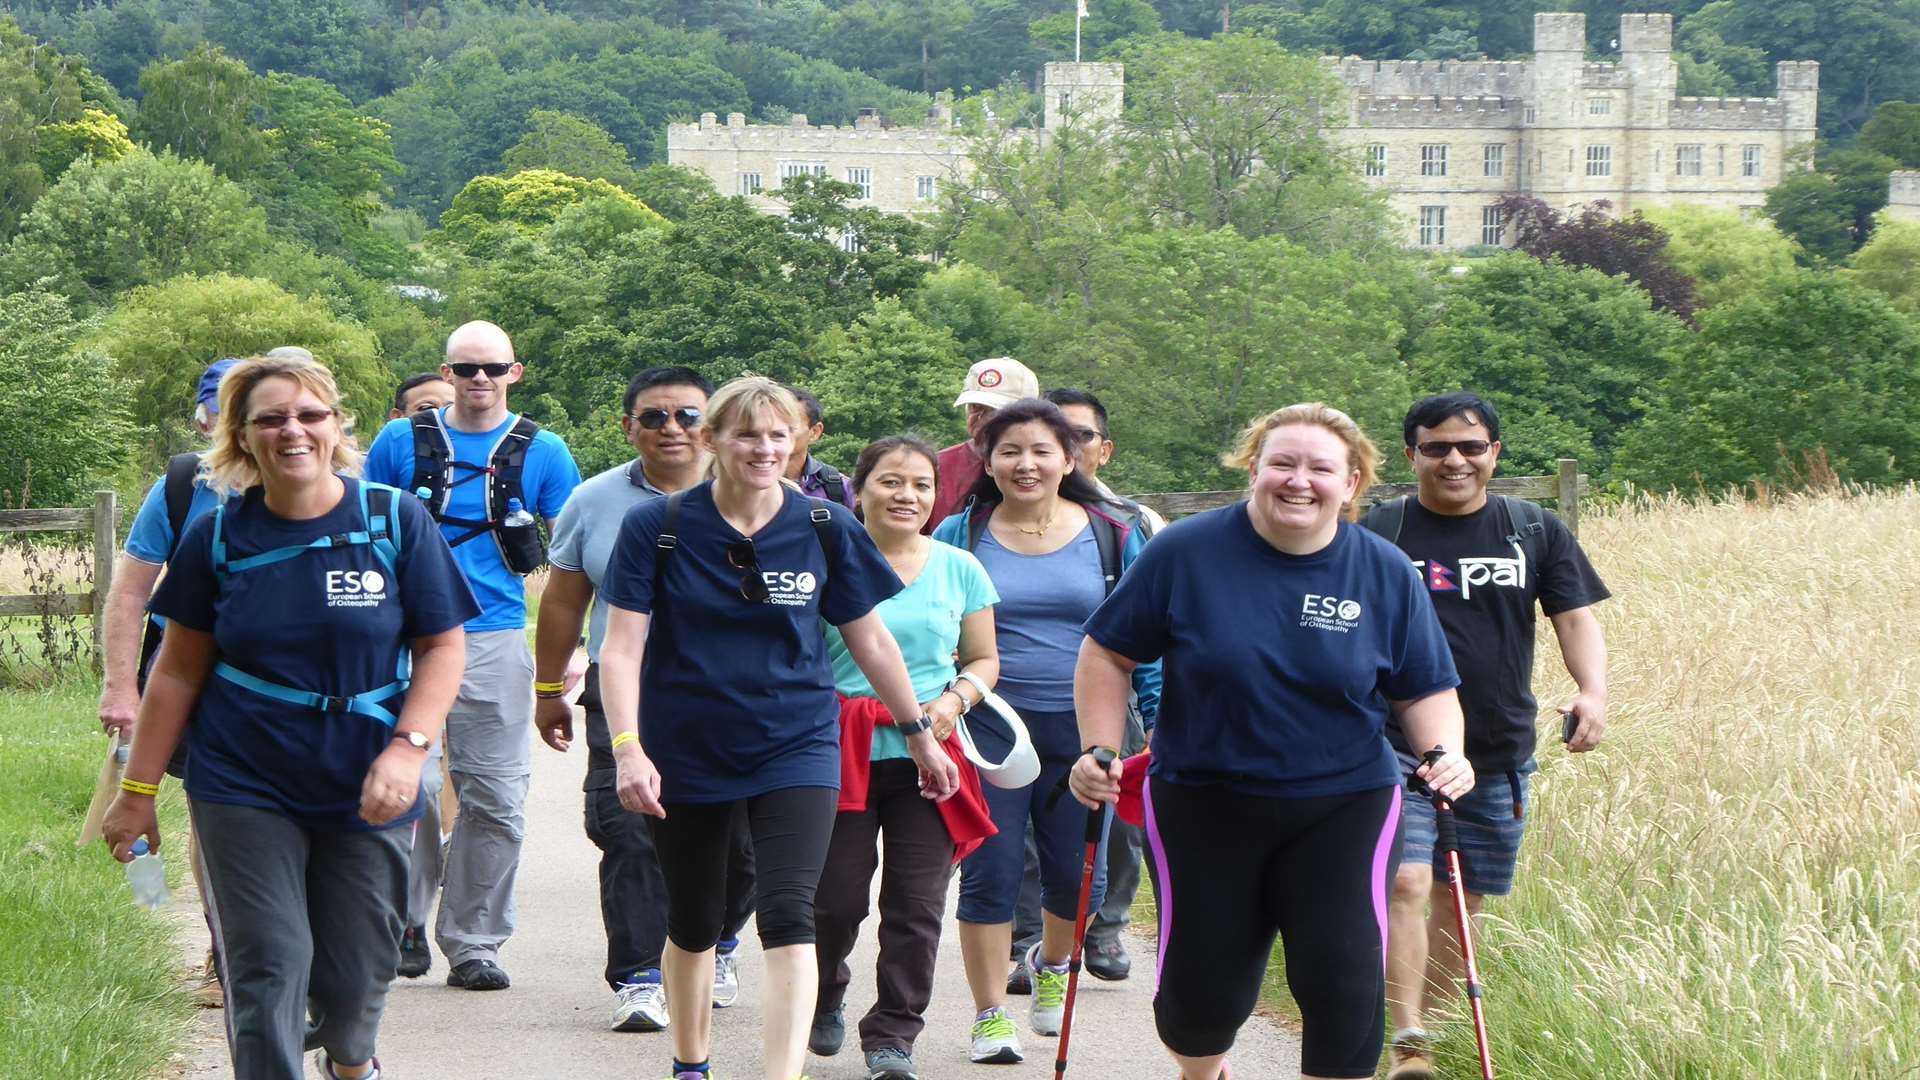 KM Charity Walk participants enjoyed views of Leeds Castle, Maidstone.